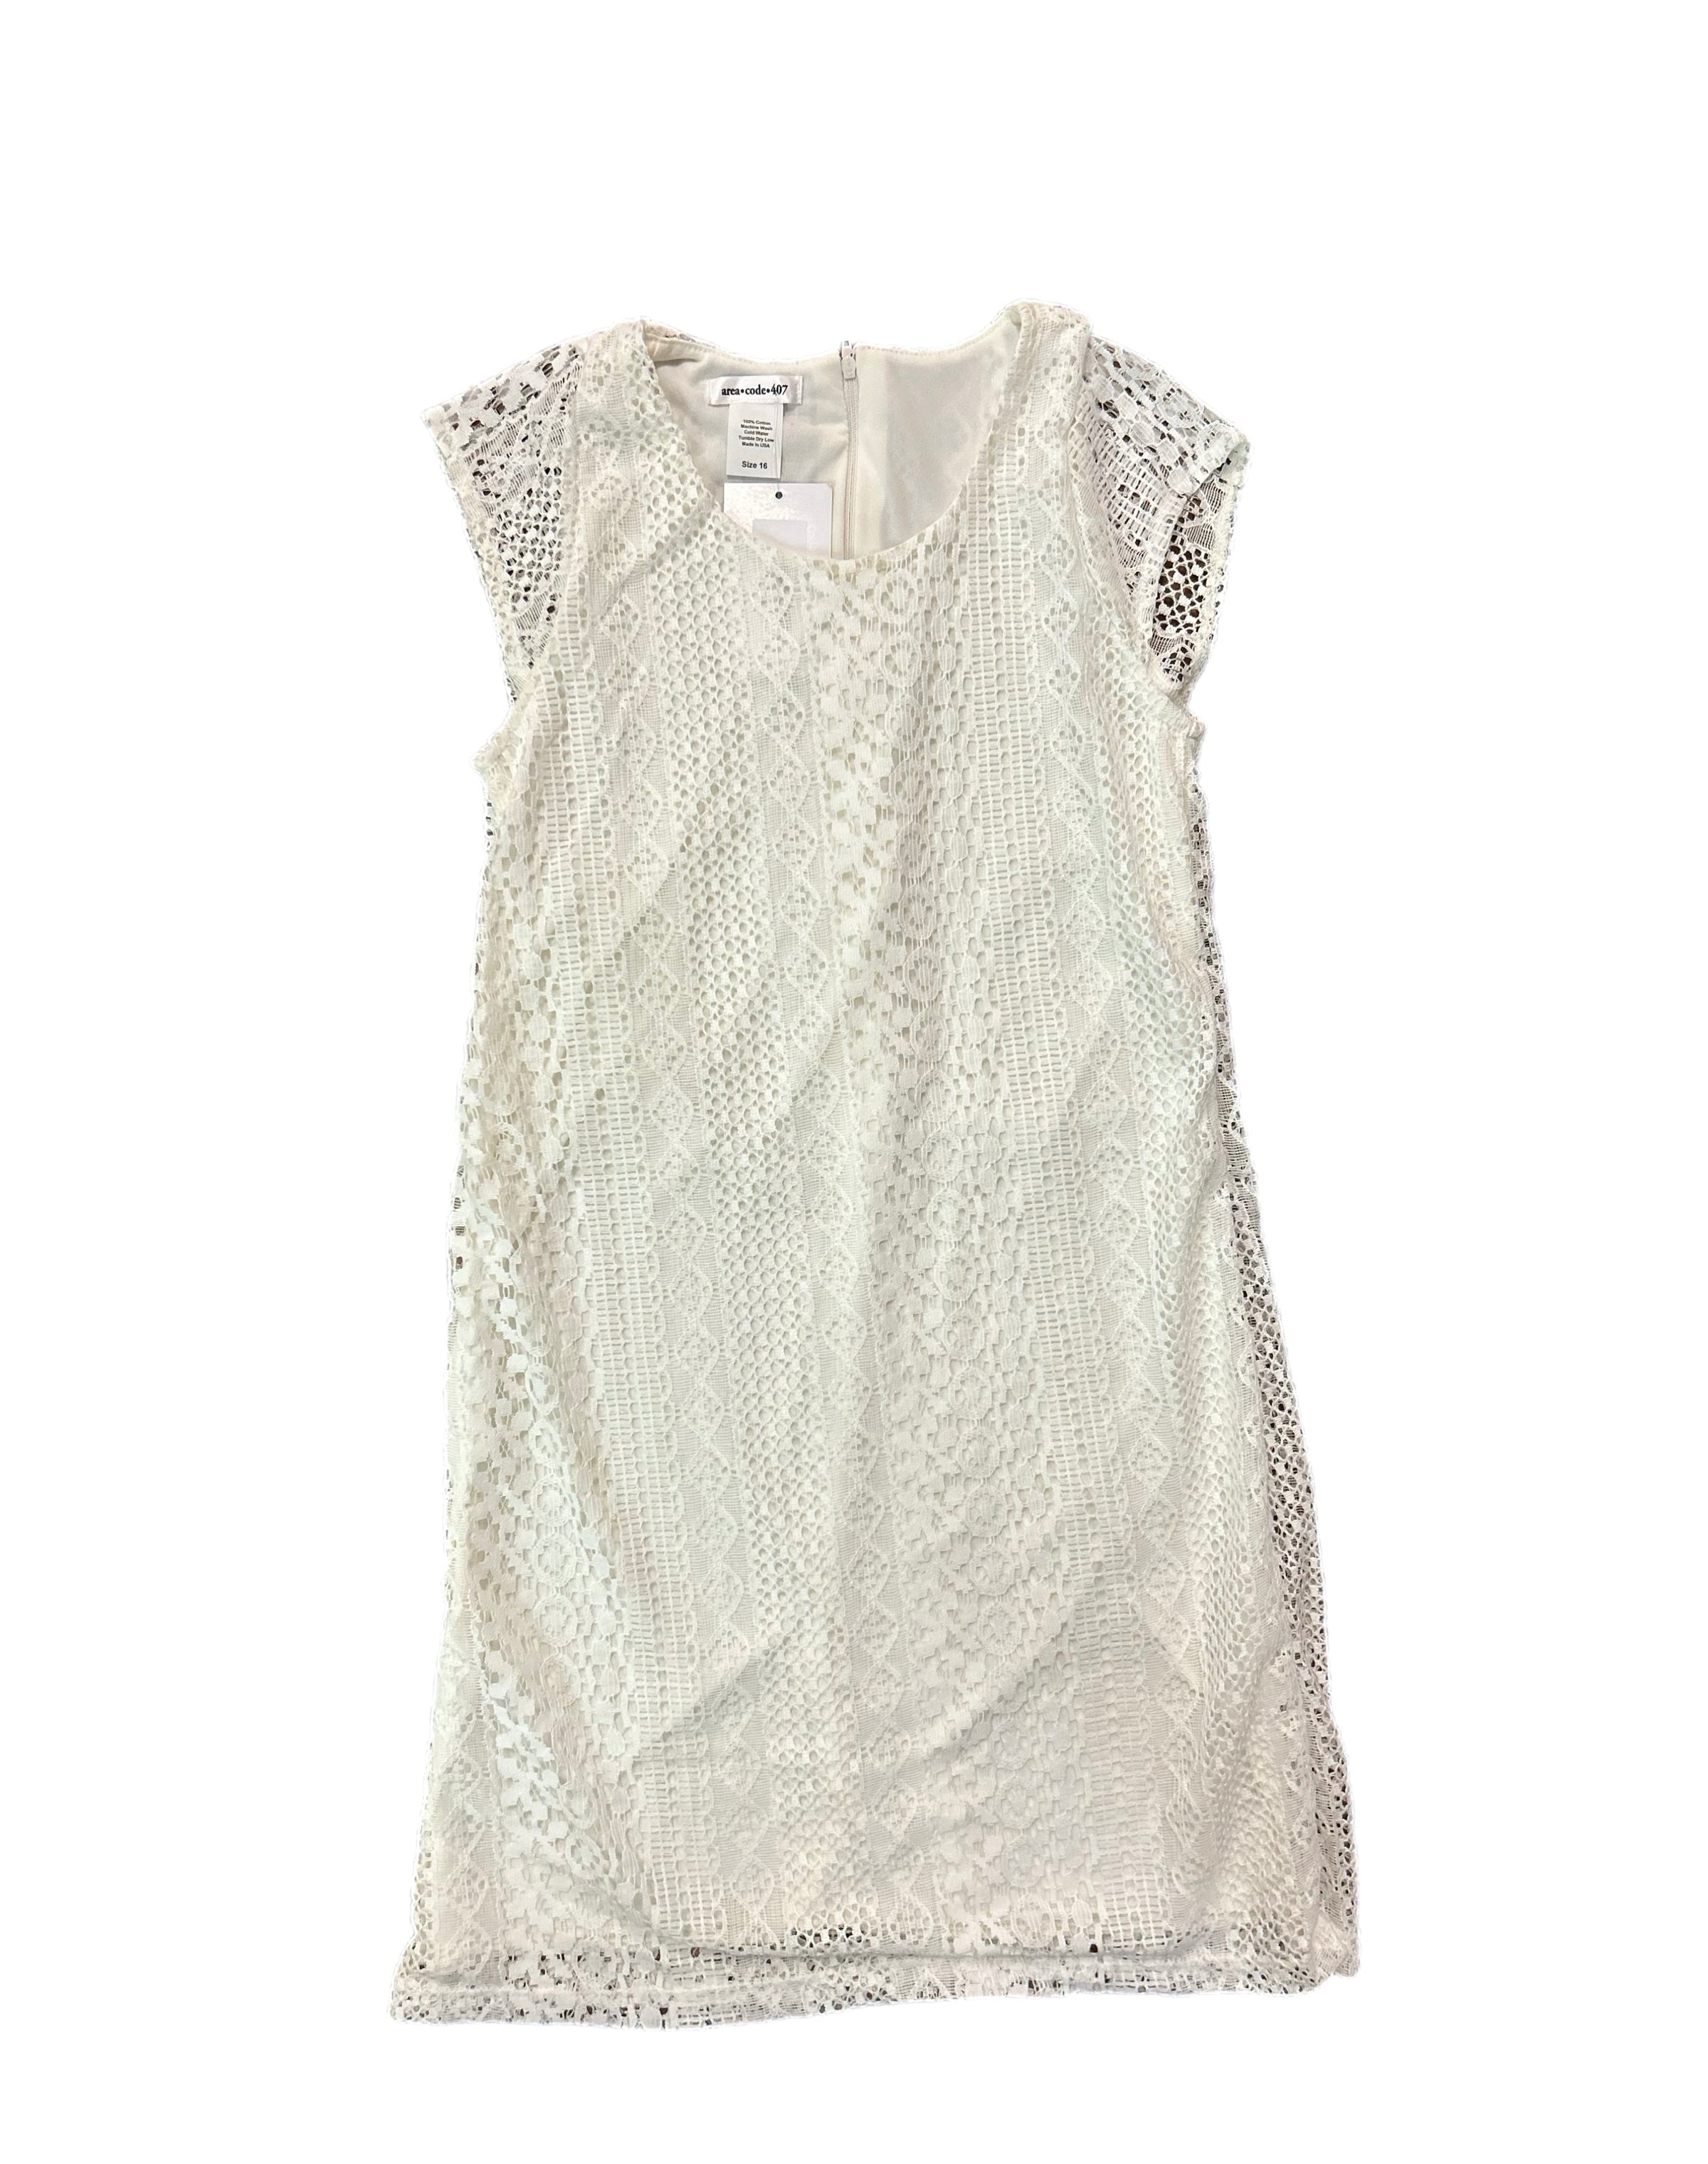 TWEEN WHITE CROCHET DRESS